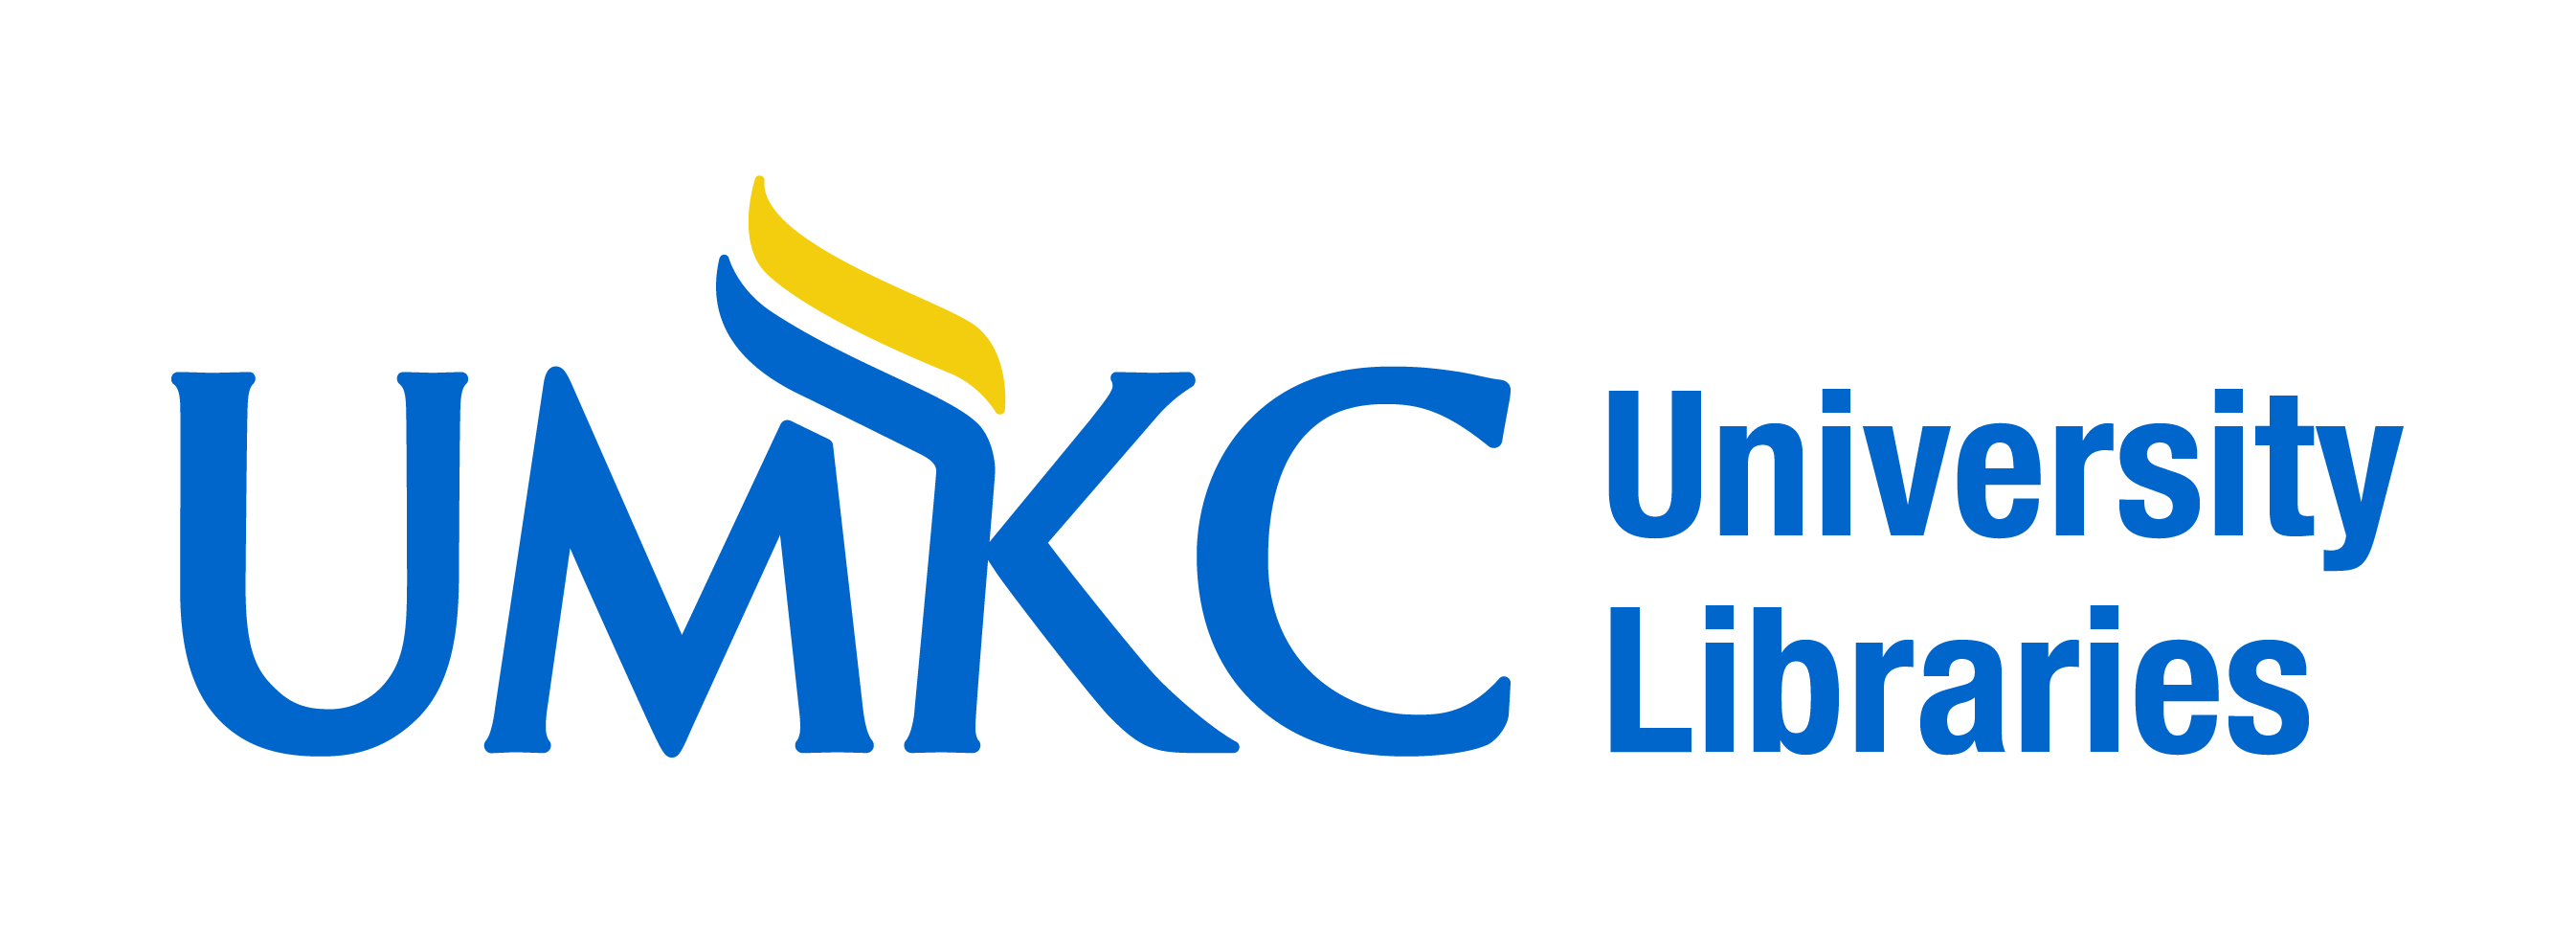 UMKC Logo